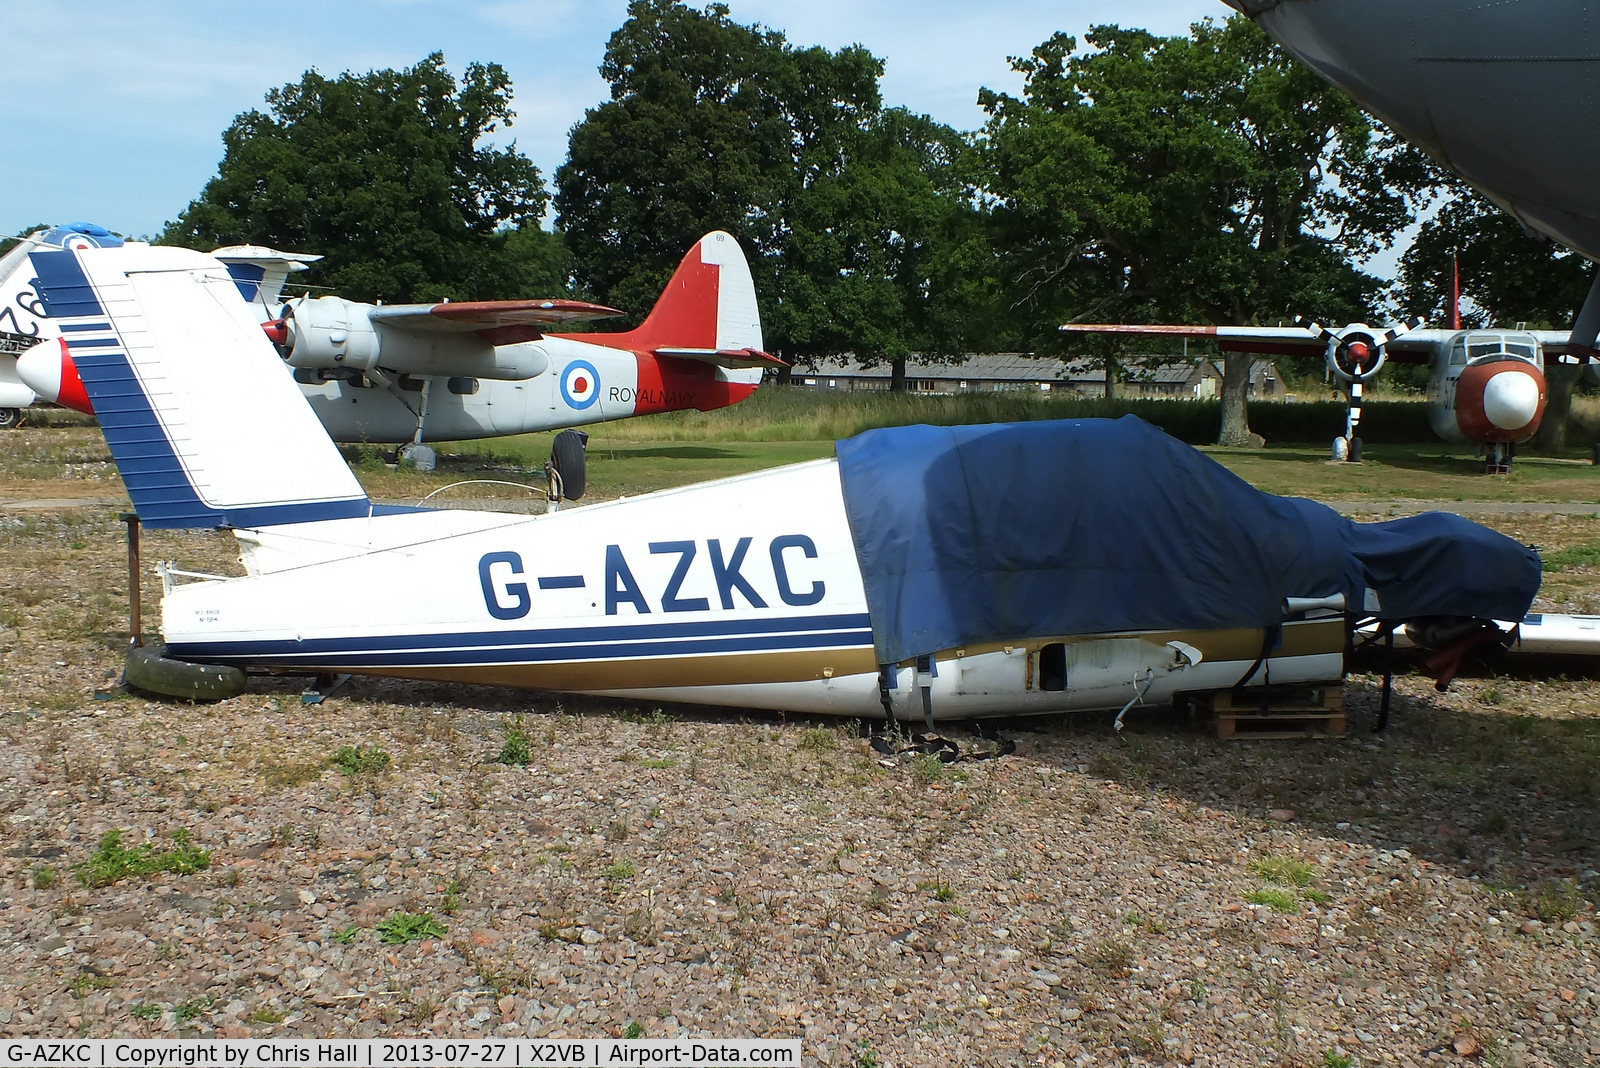 G-AZKC, 1972 Socata MS-880B Rallye Club C/N 1914, at the Gatwick Aviation Museum